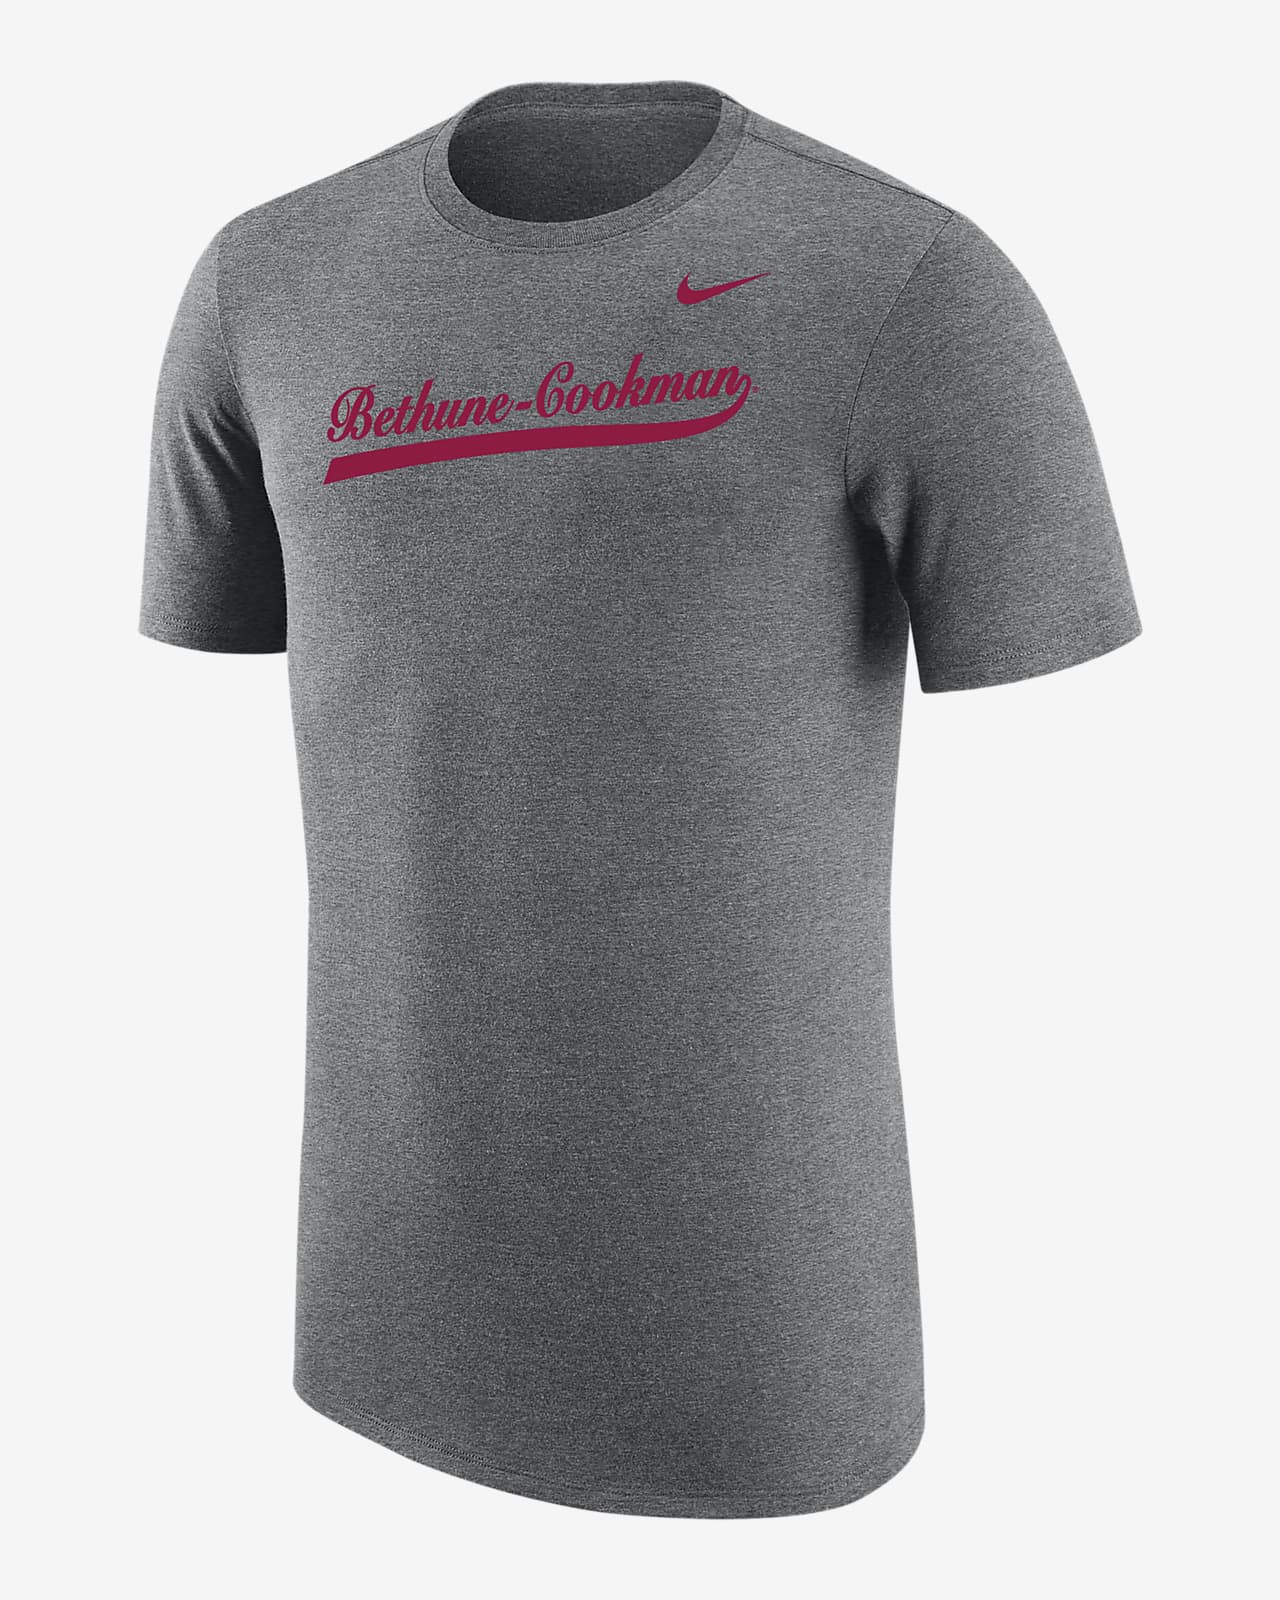 Bethune-Cookman Men's Nike College T-Shirt